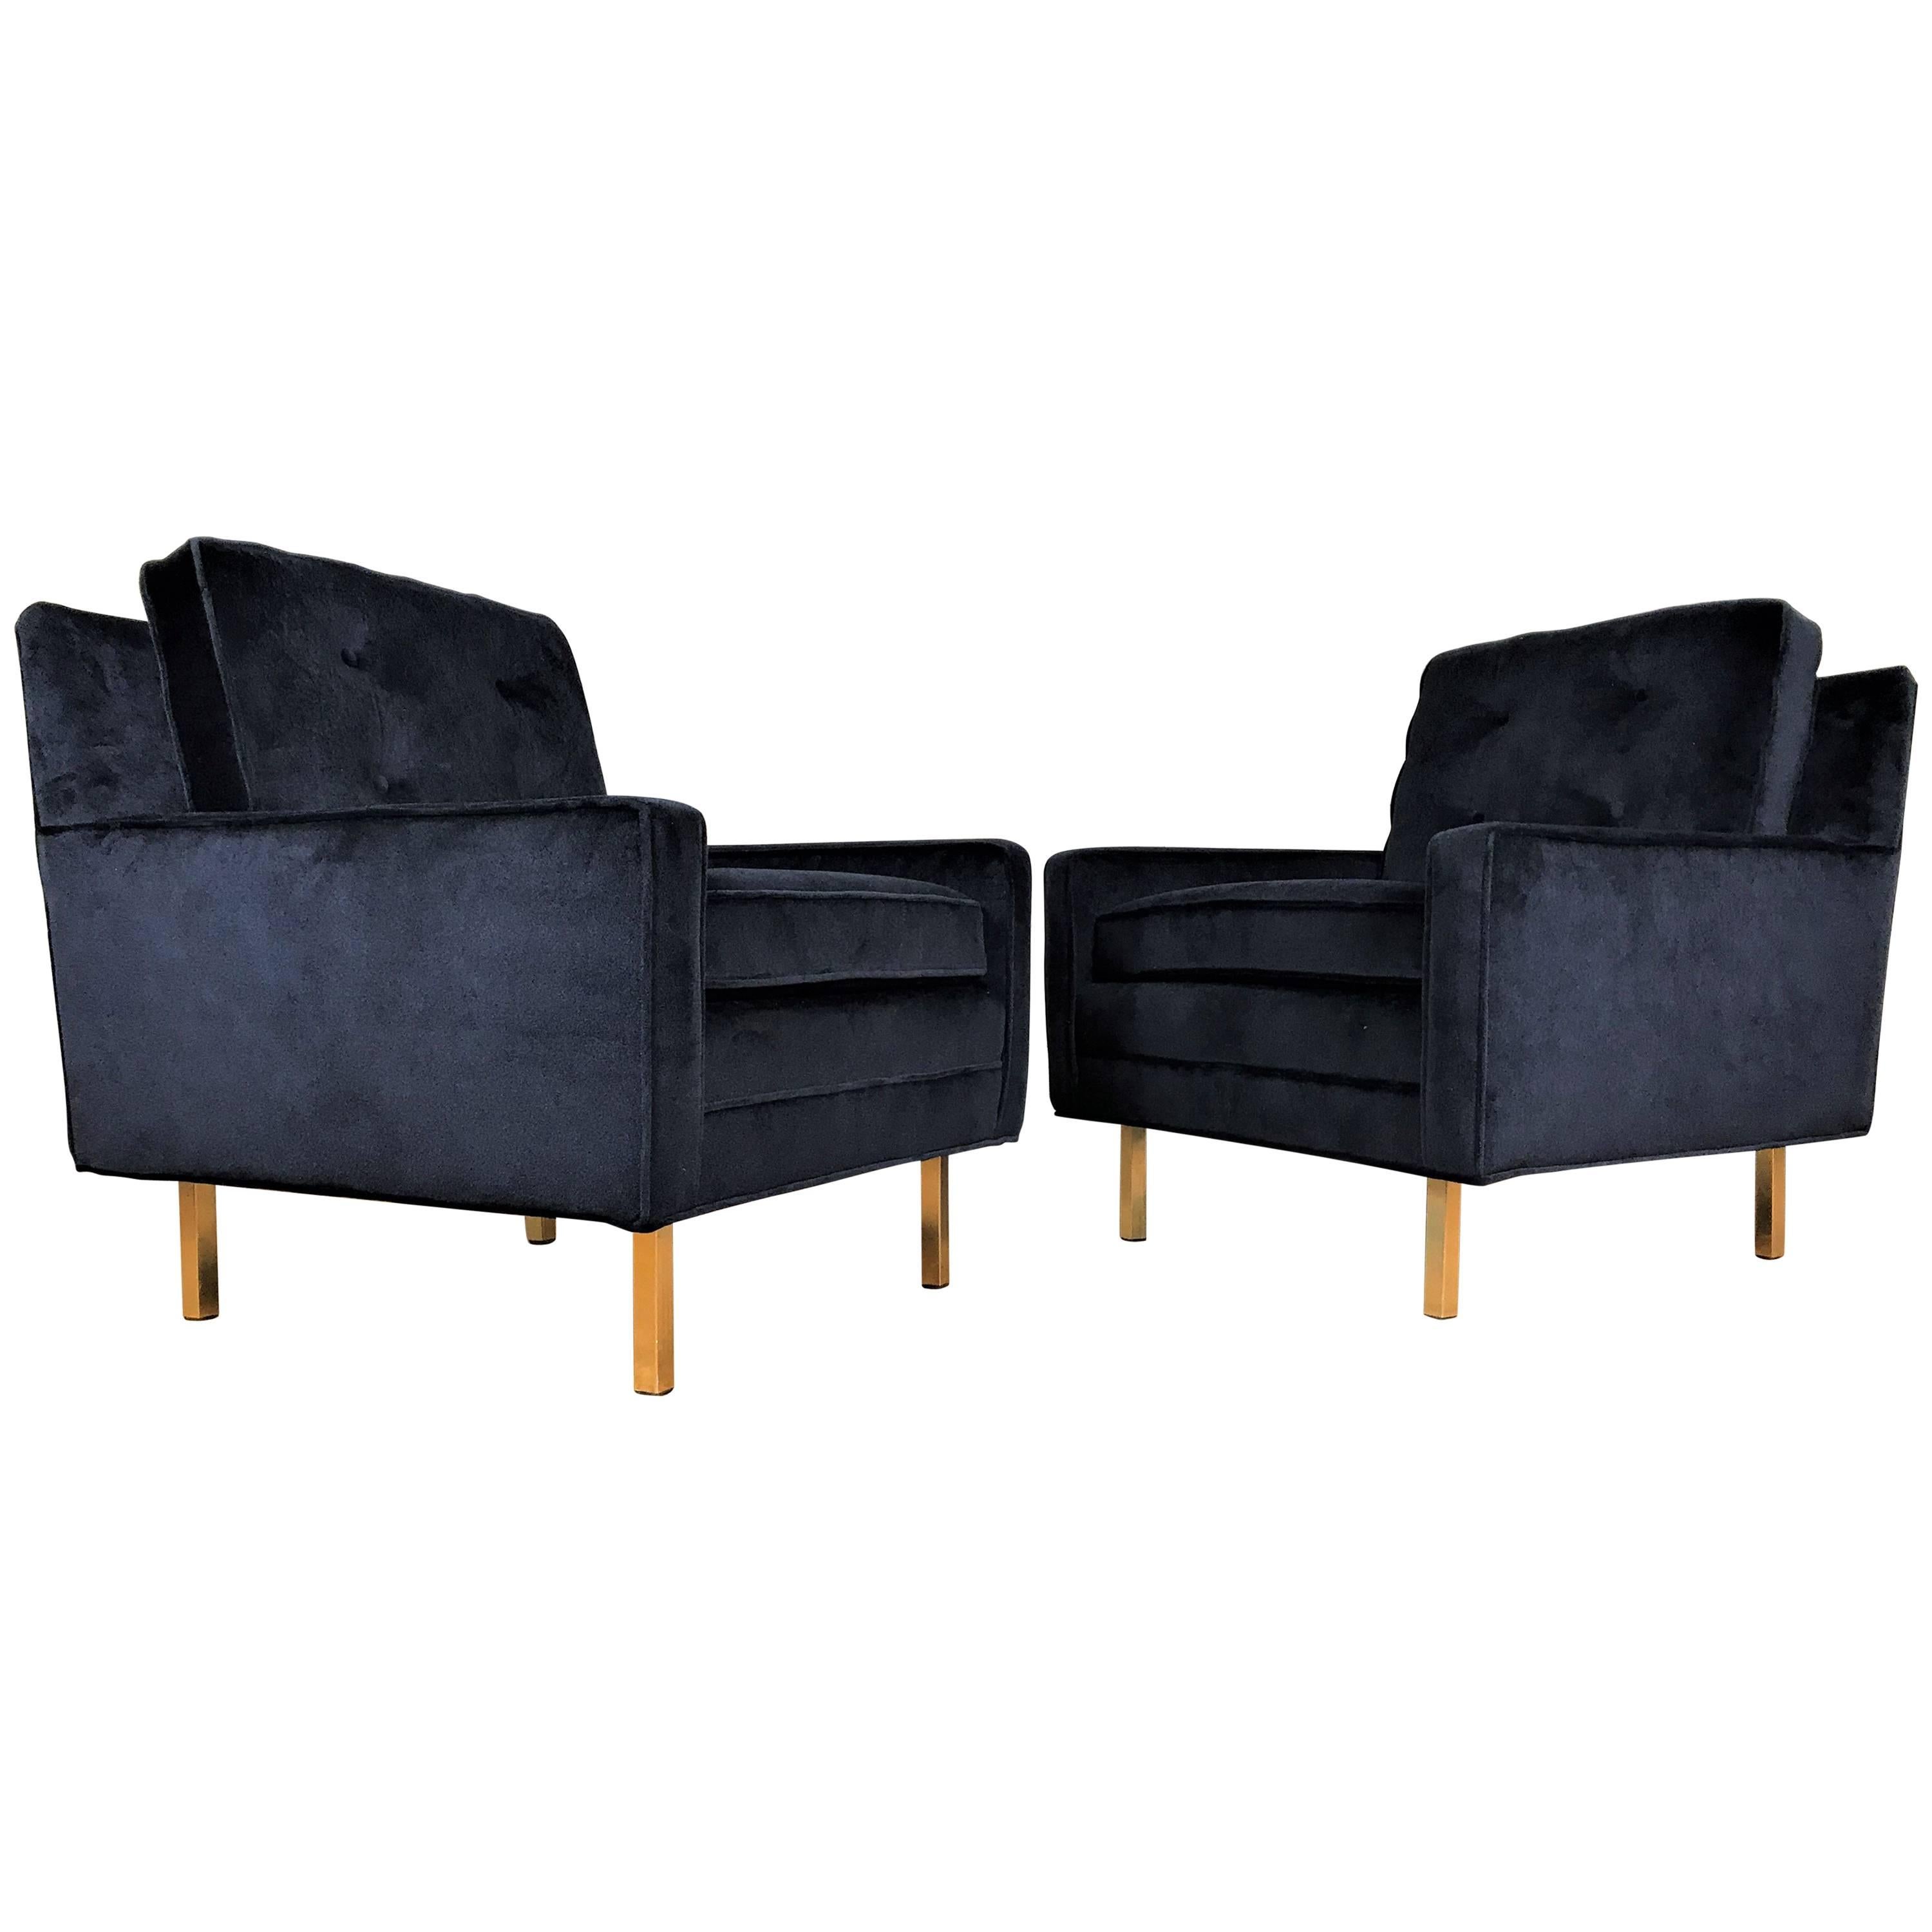 Pair of Mid-Century Modern Tuxedo Lounge Chairs in Black Velvet with Brass Legs